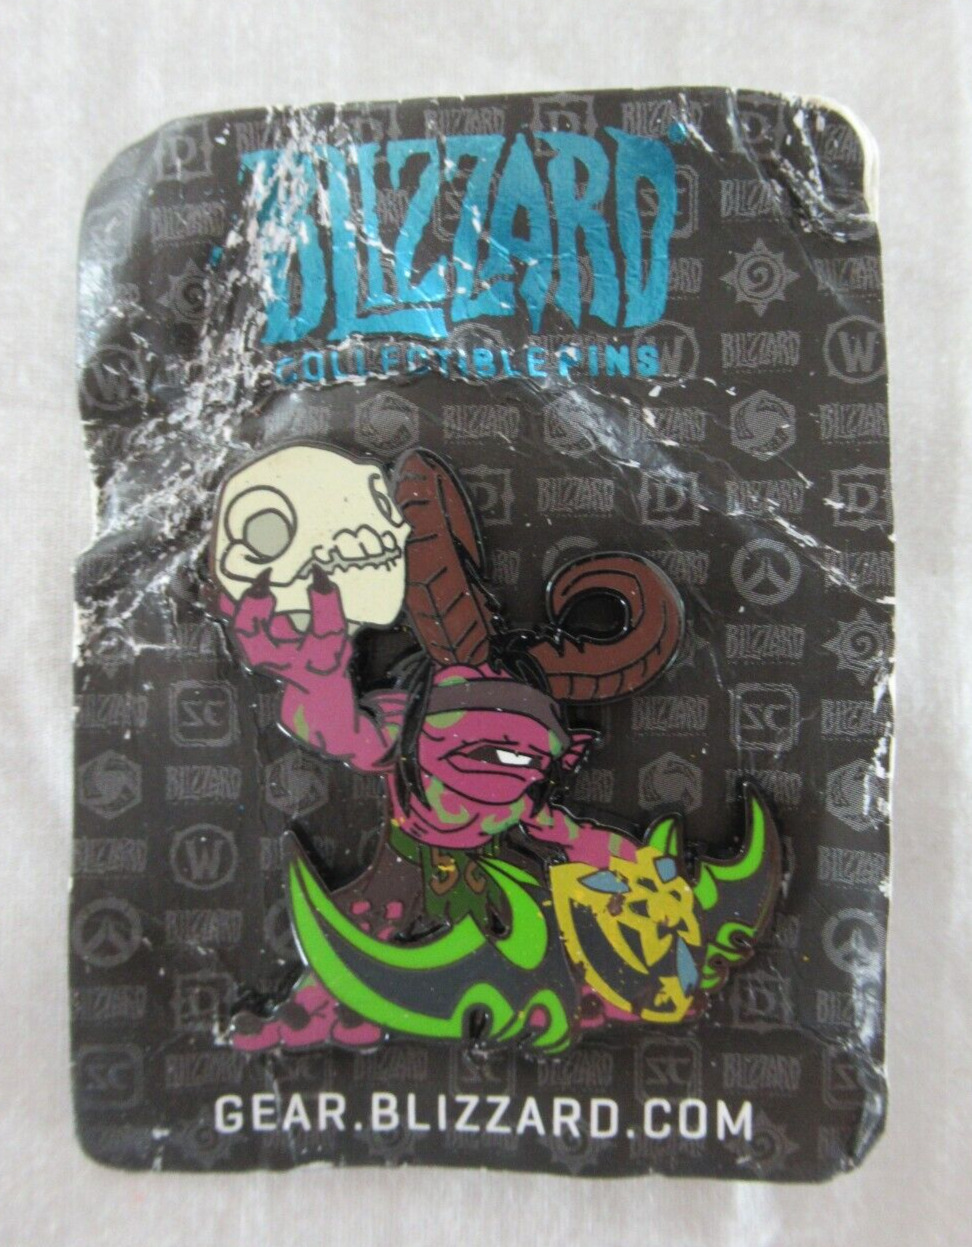 World of Warcraft Murkidan Blizzard Blizzcon 2015 Limited Edition Pin